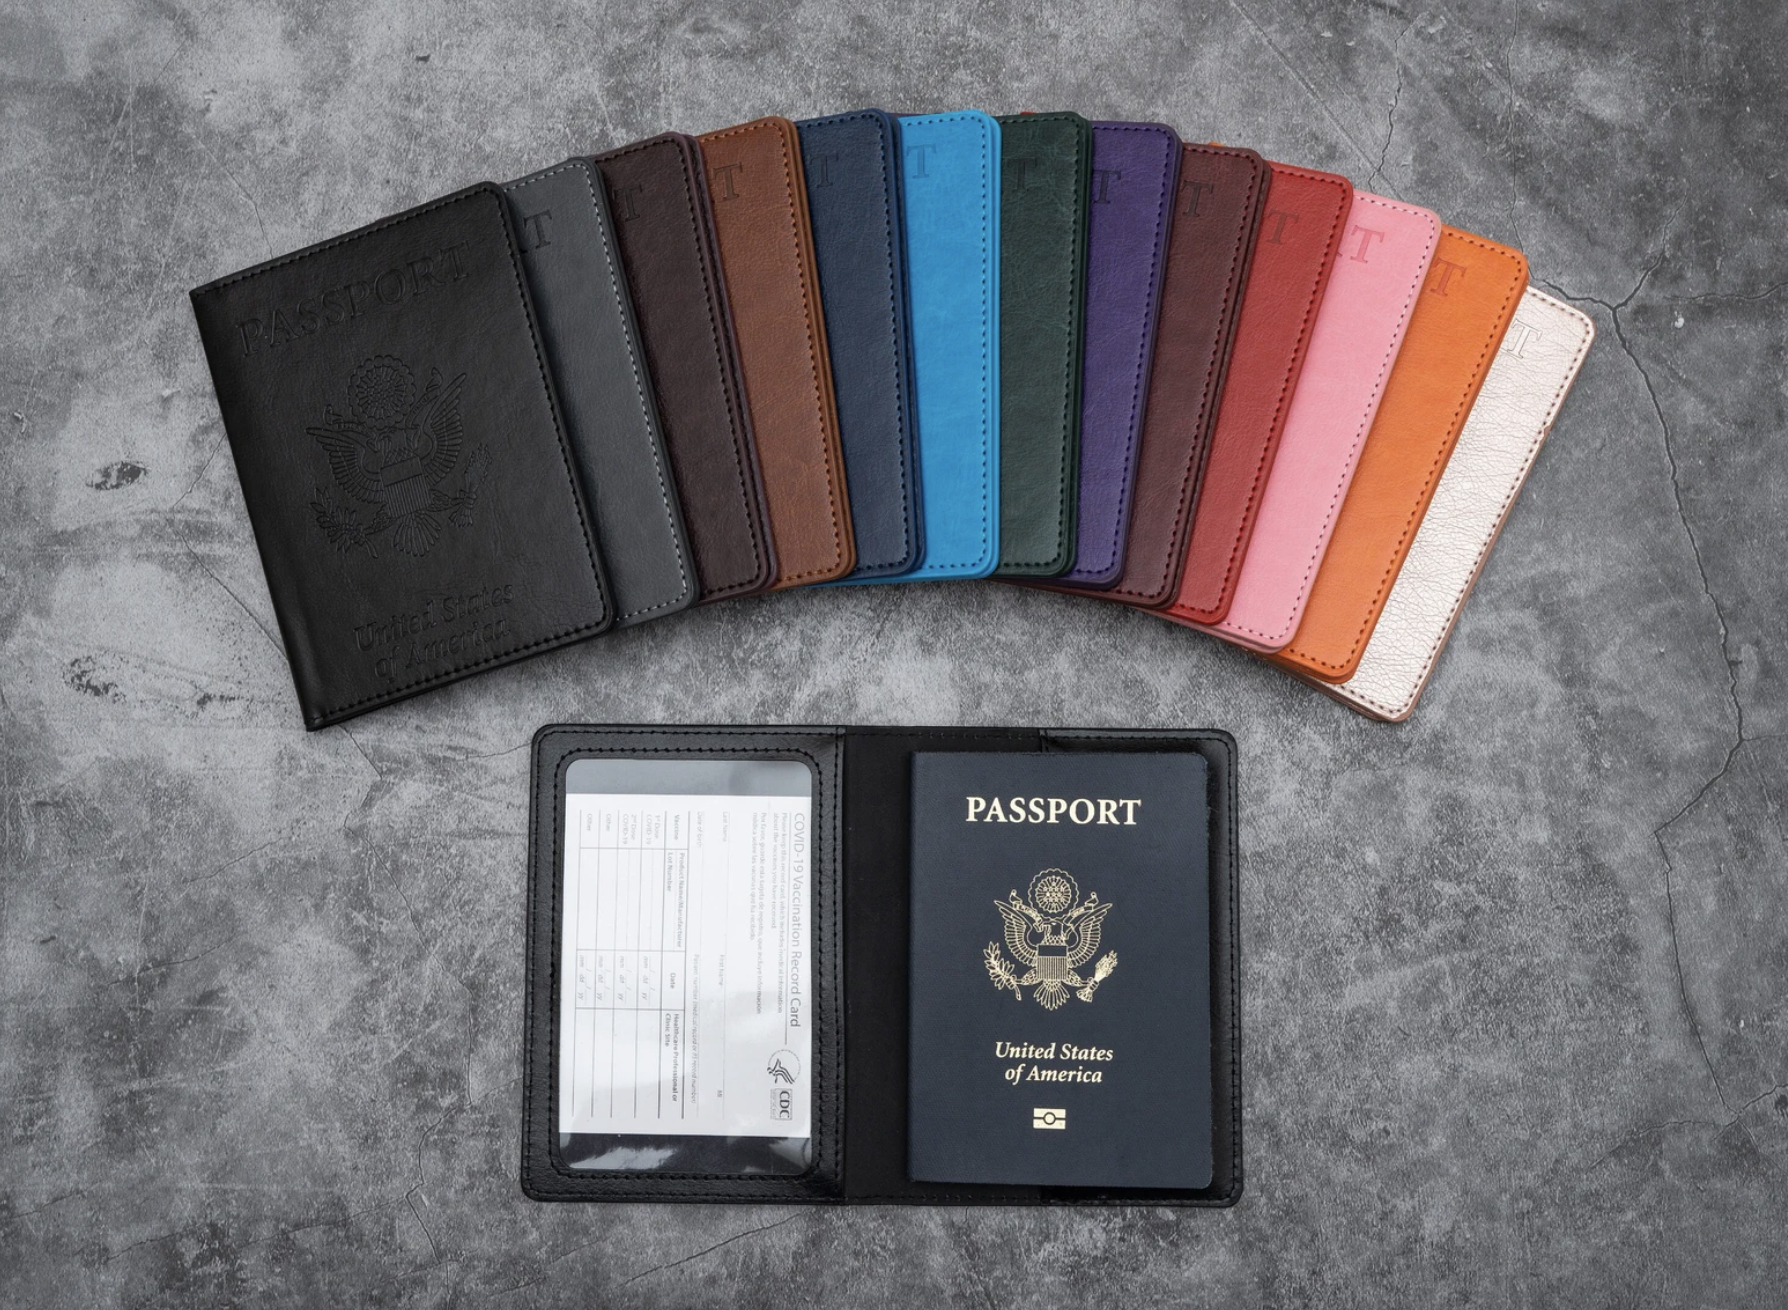 vaccine passport holders in various colors